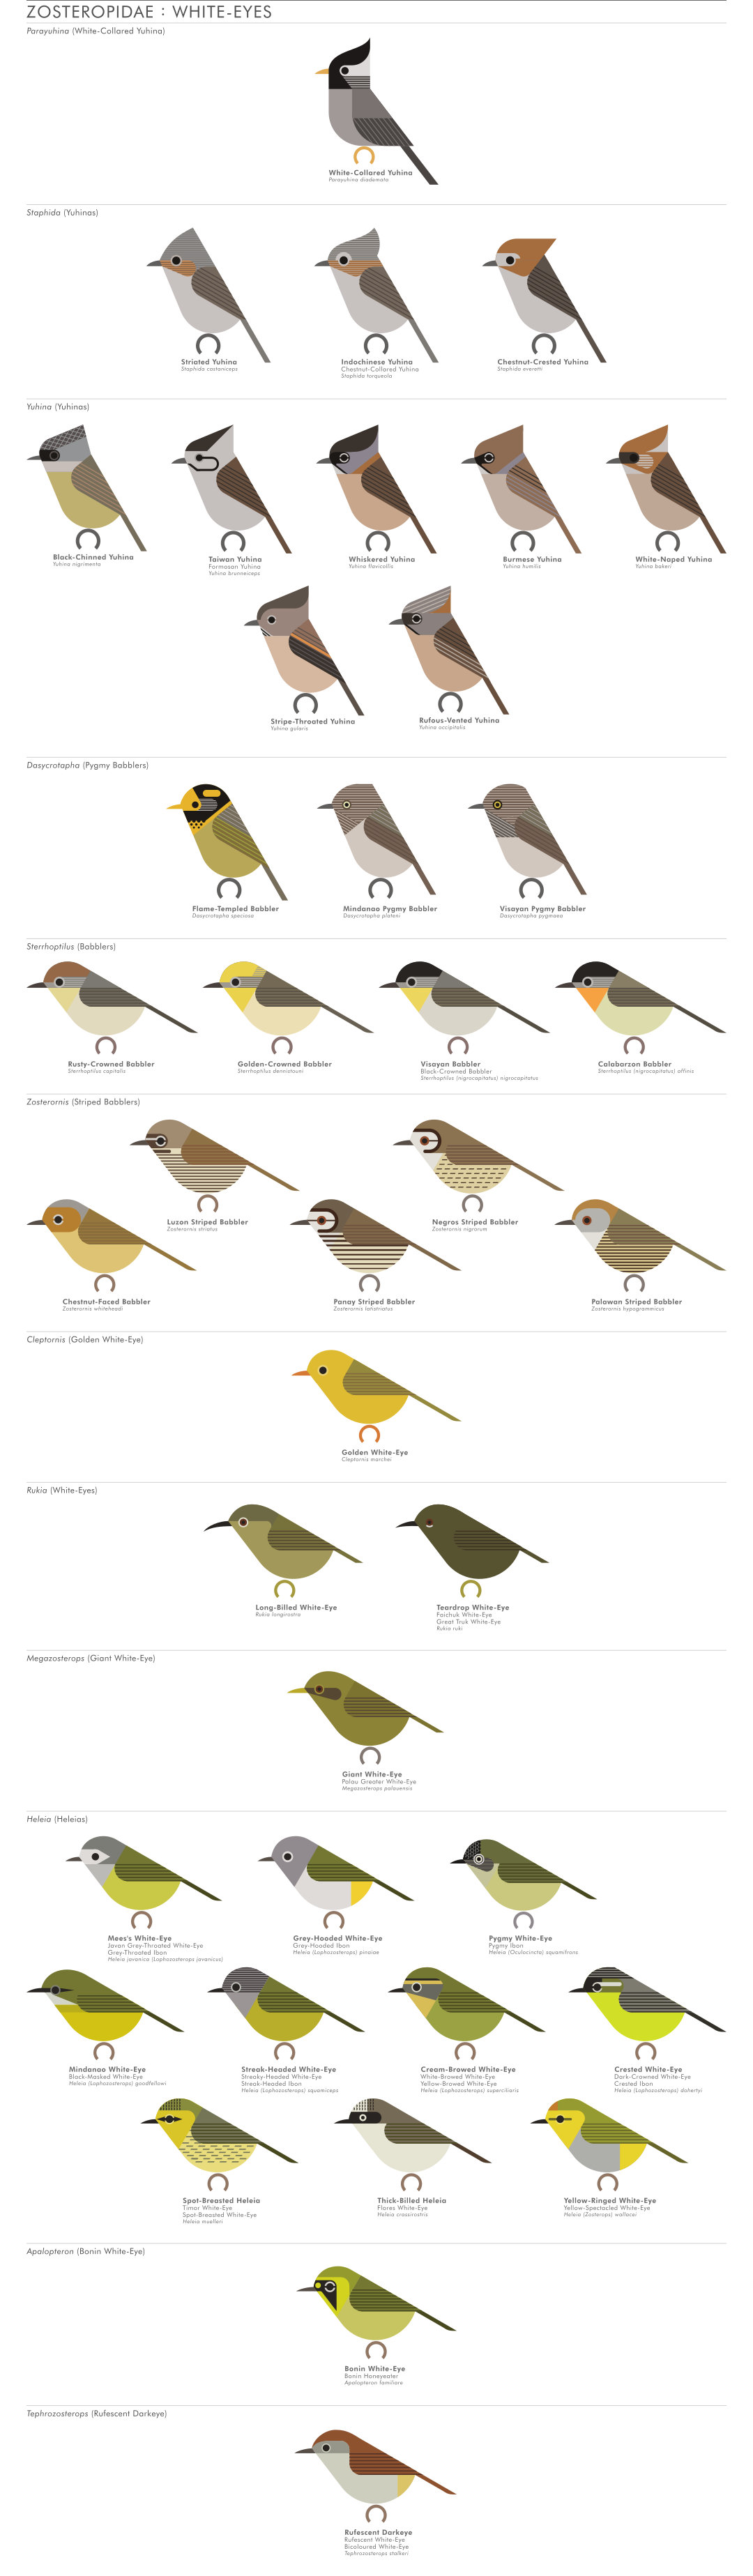 scott partridge - AVE - avian vector encyclopedia - whiteeyes - bird vector art